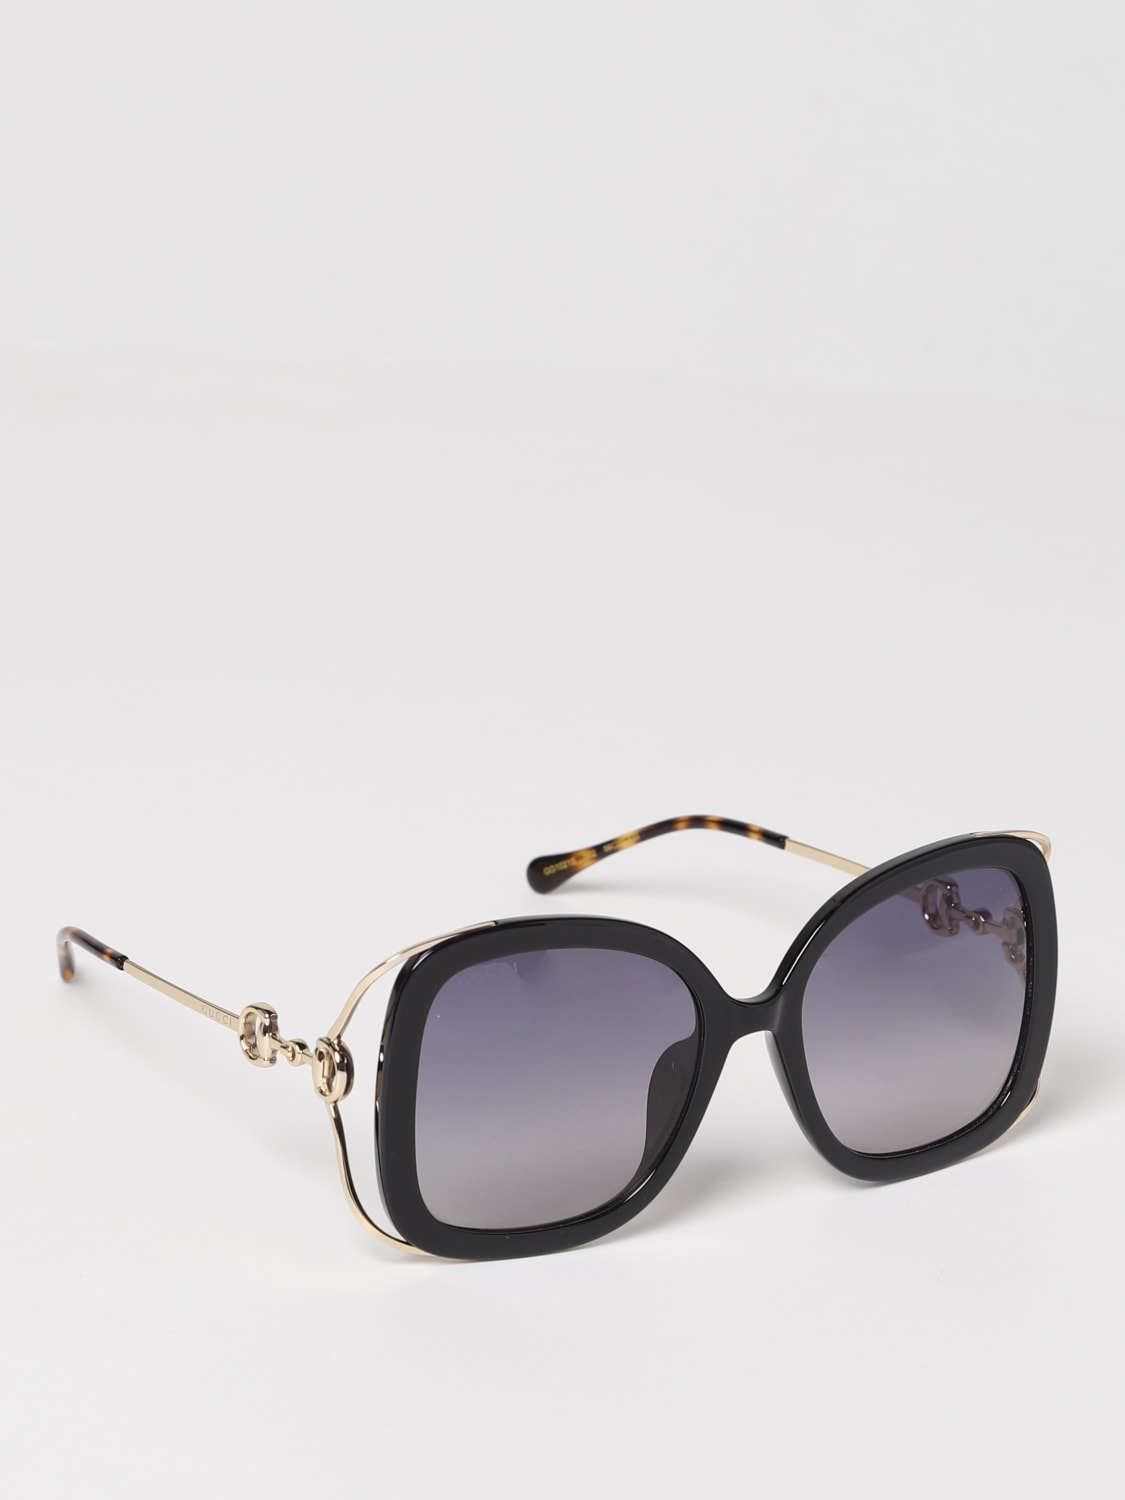 Gucci Acetate And Metal Sunglasses Black Gucci Sunglasses Gg1021s Online On Giglio